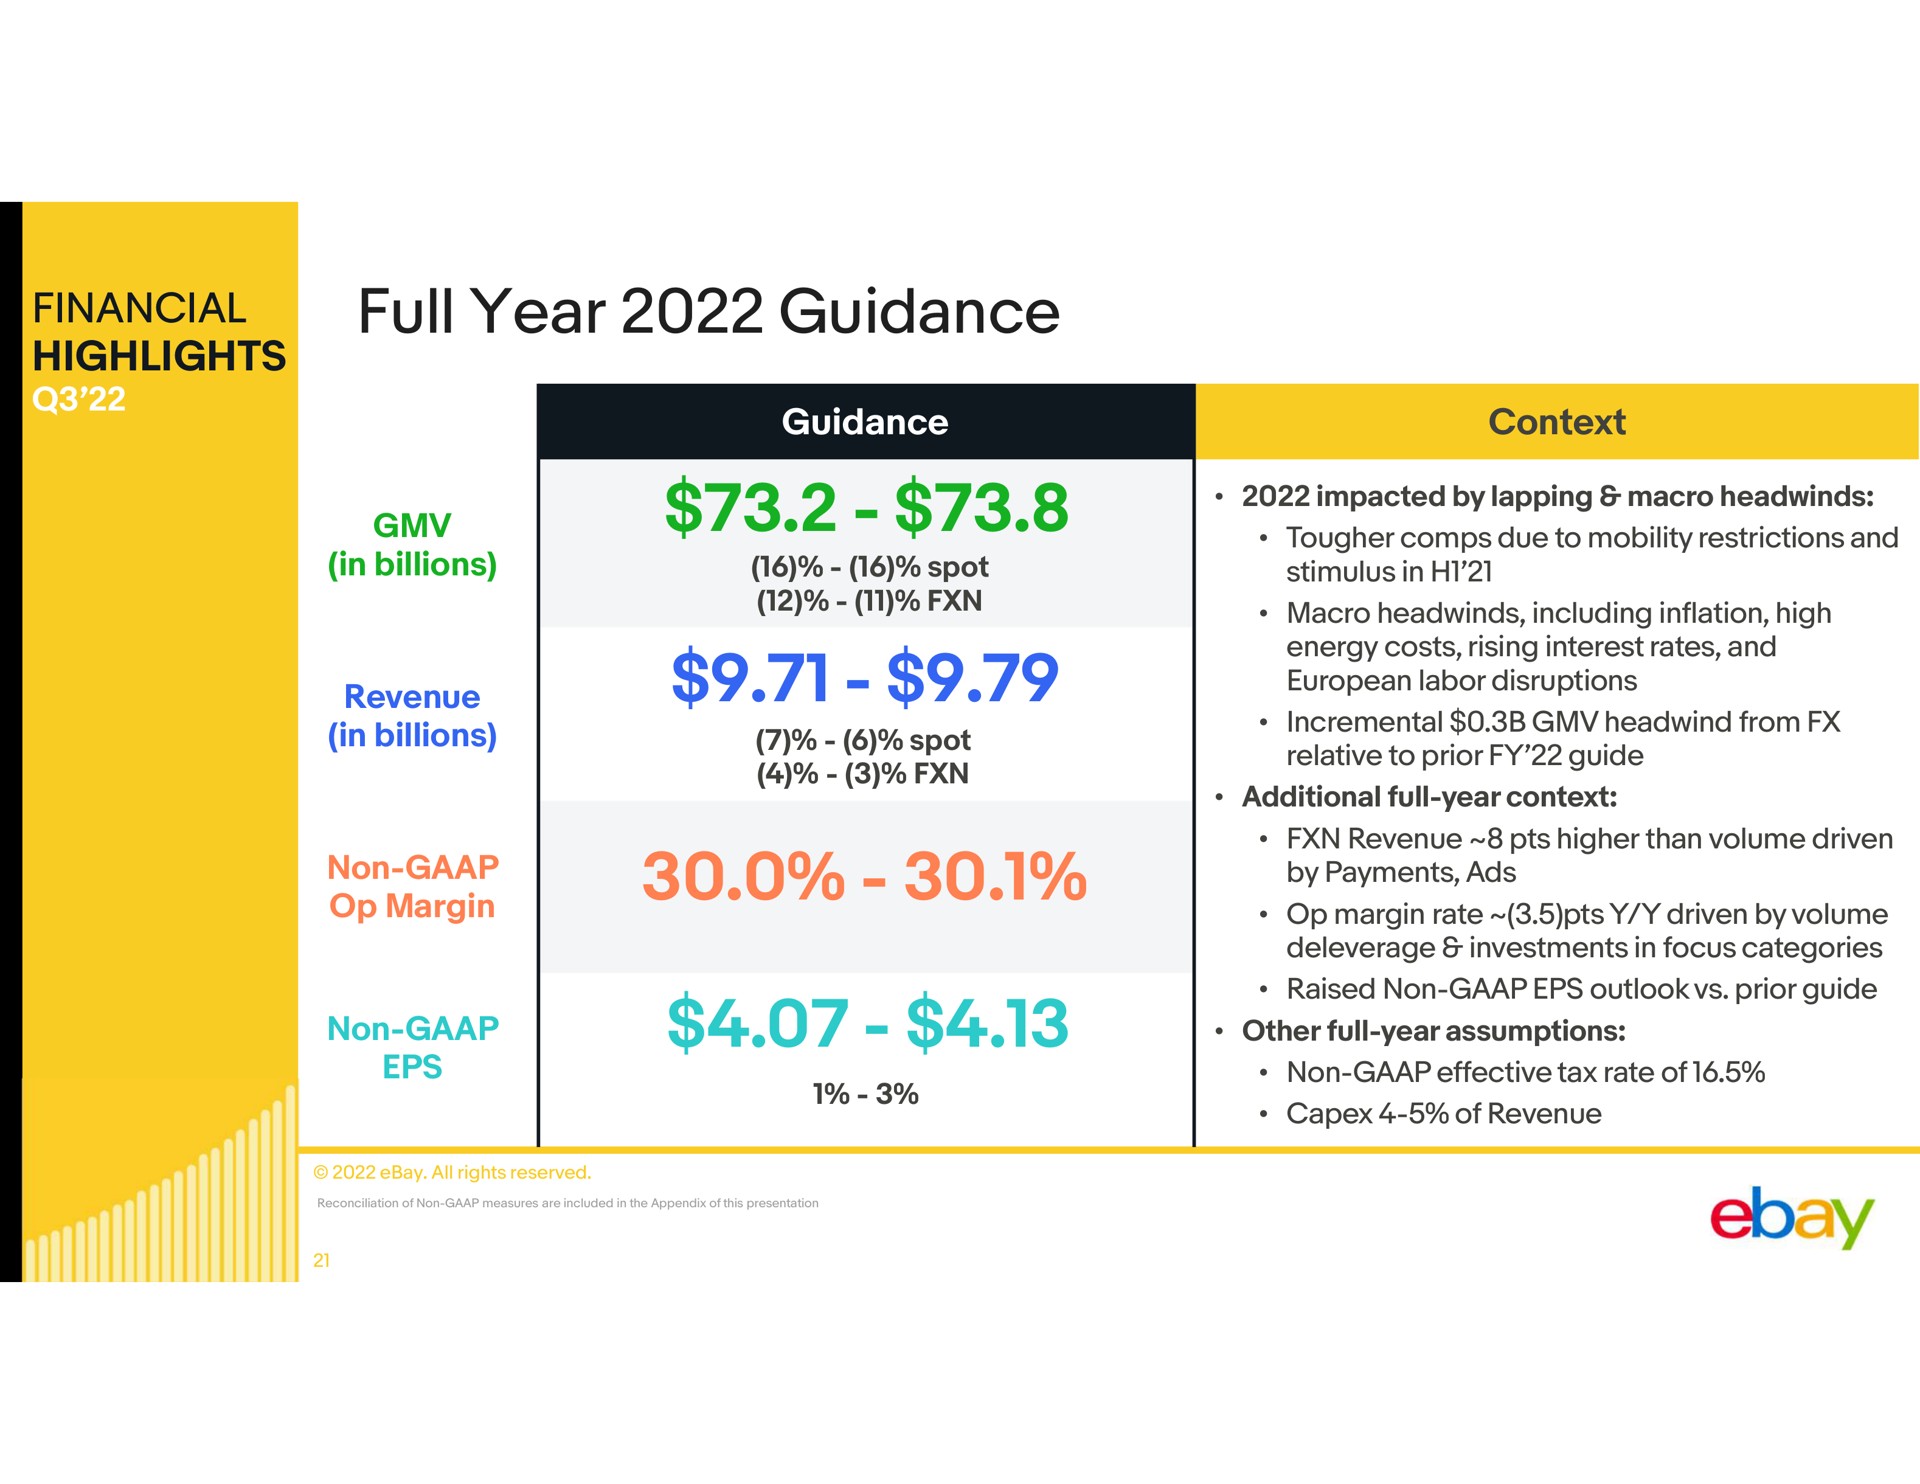 financial highlights full year guidance revenue | eBay